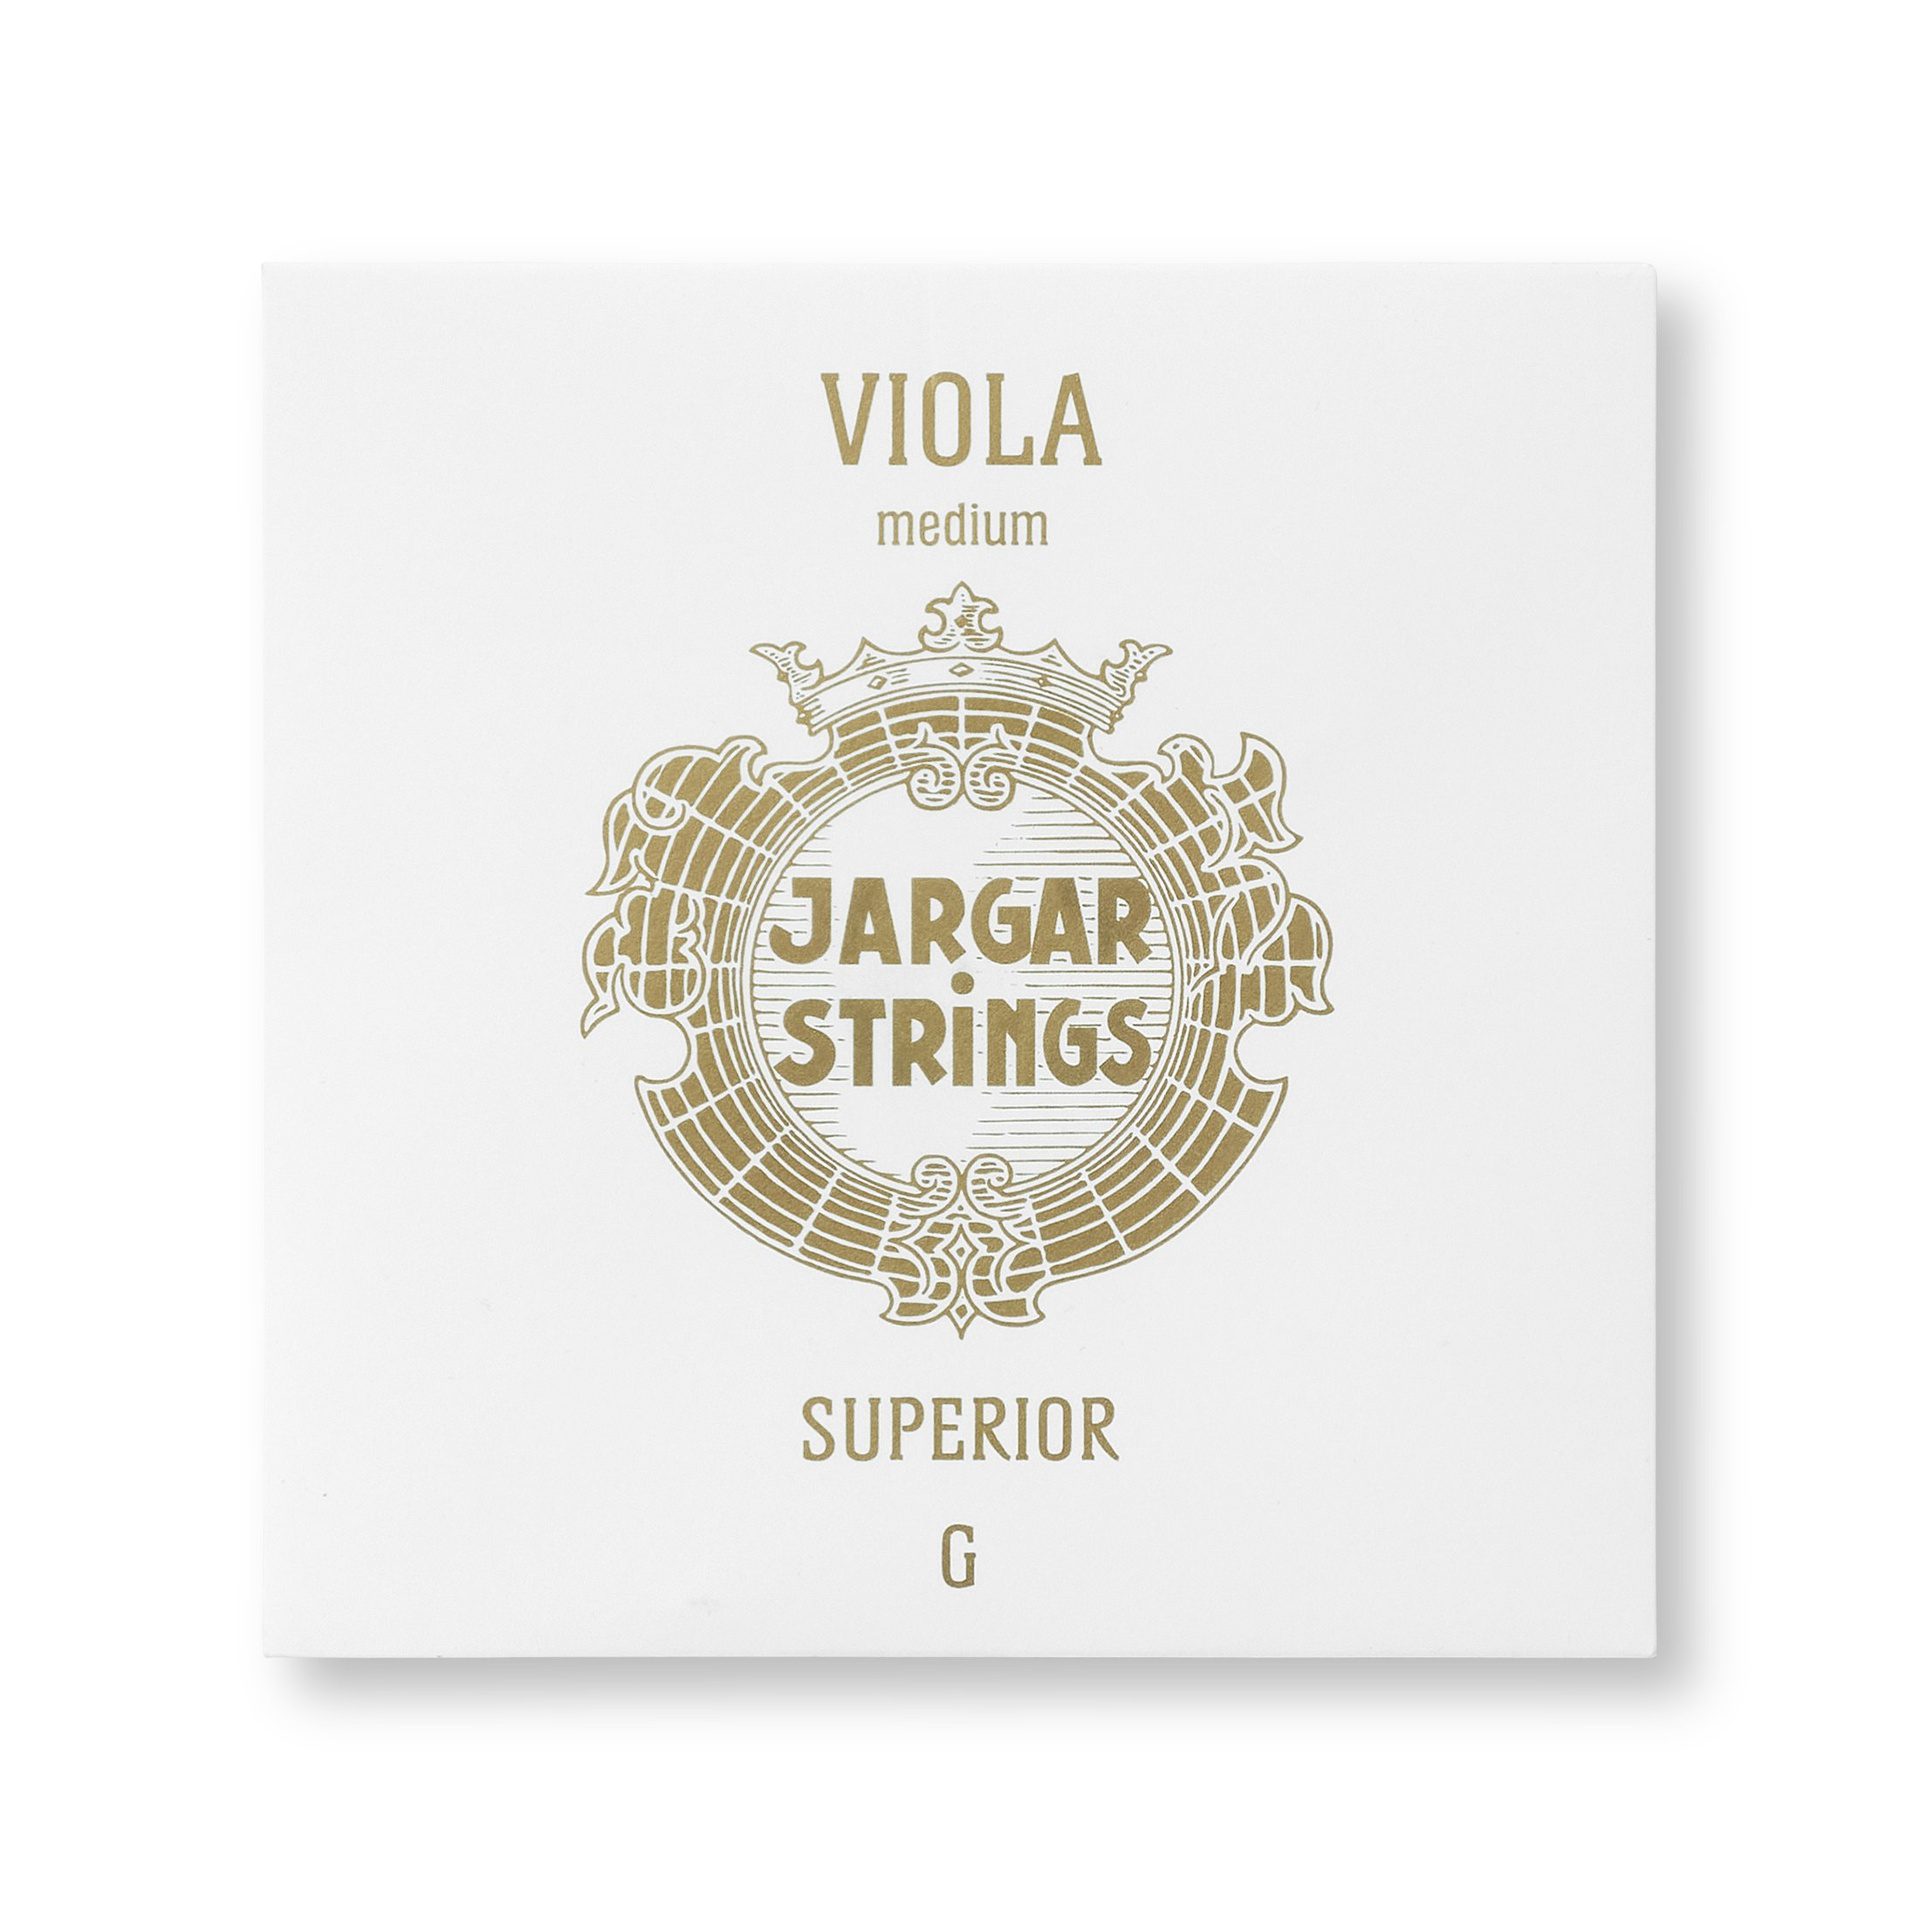 Superior Viola - Medium, Single G String, 4/4